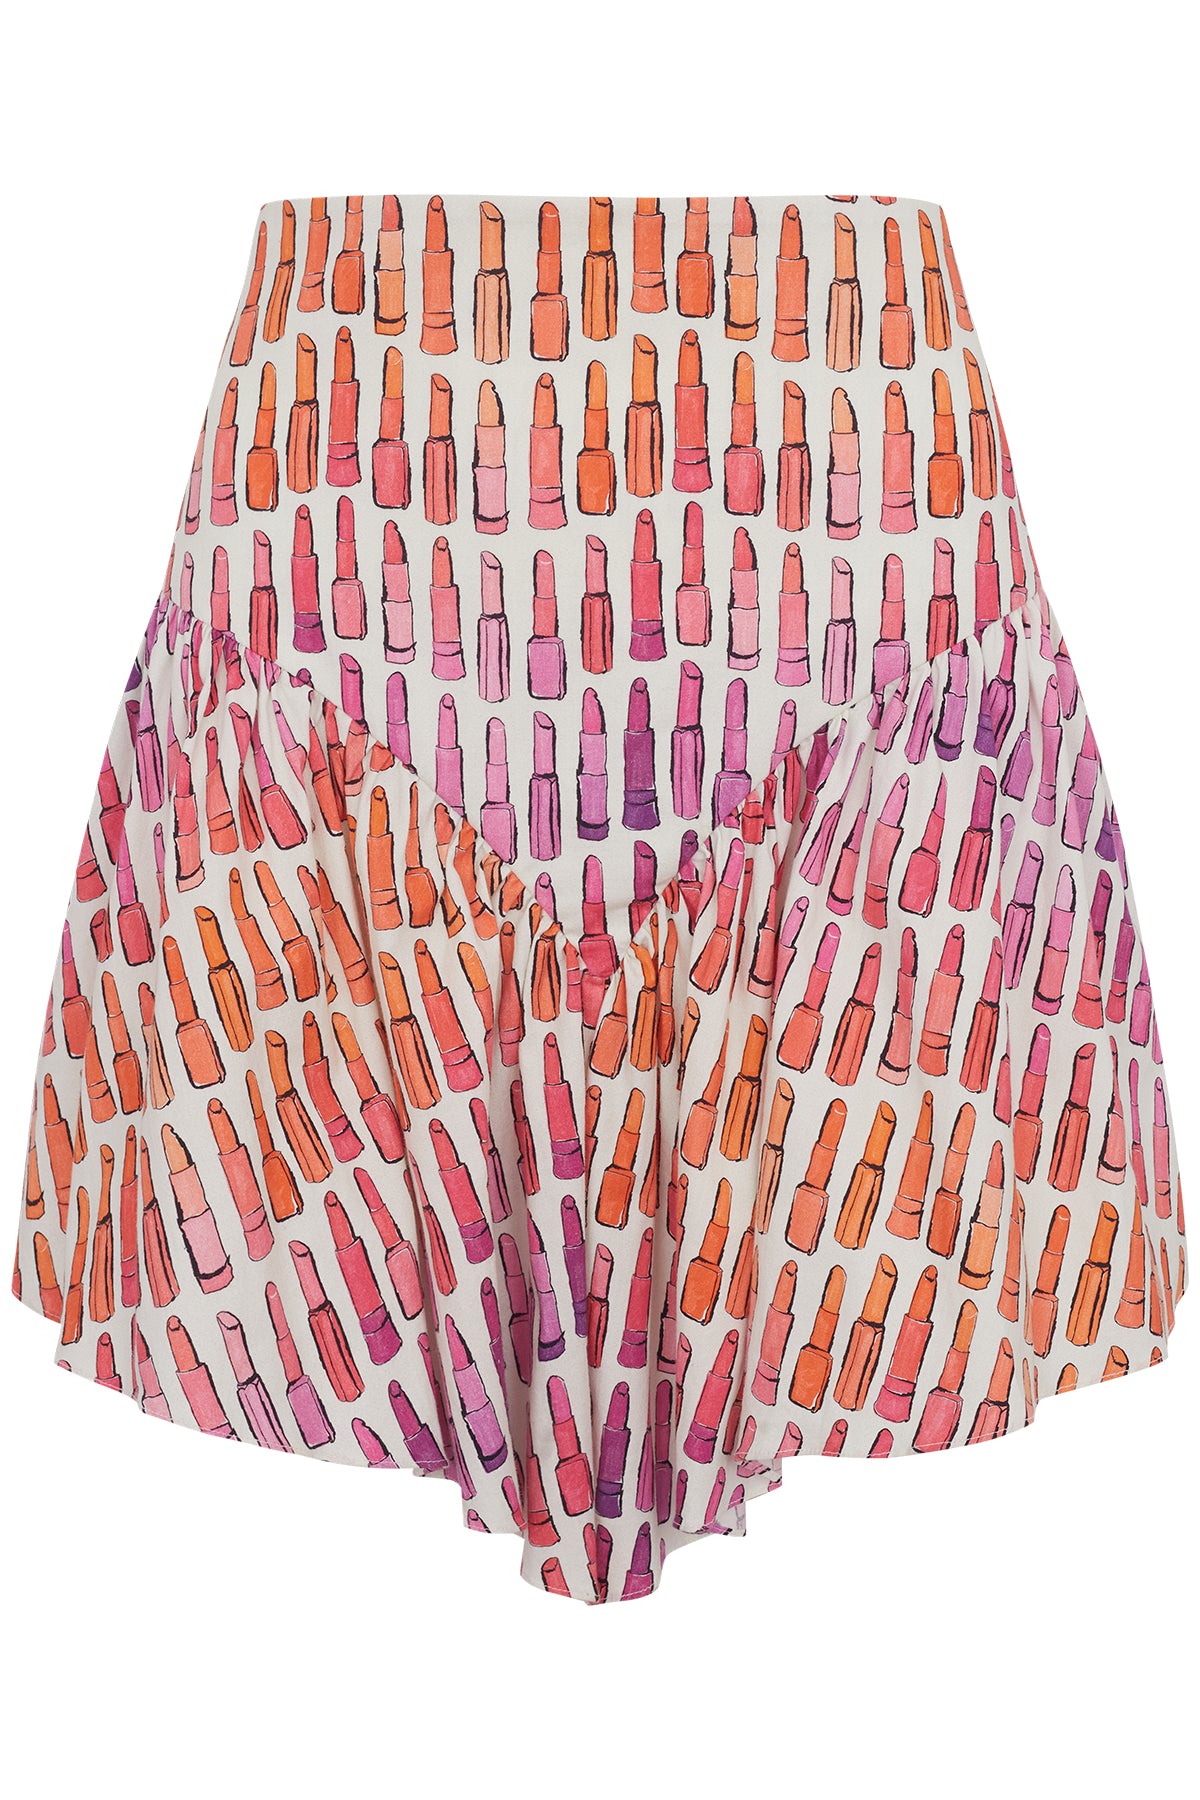 Lipstick Ruffled Short Skirt Product